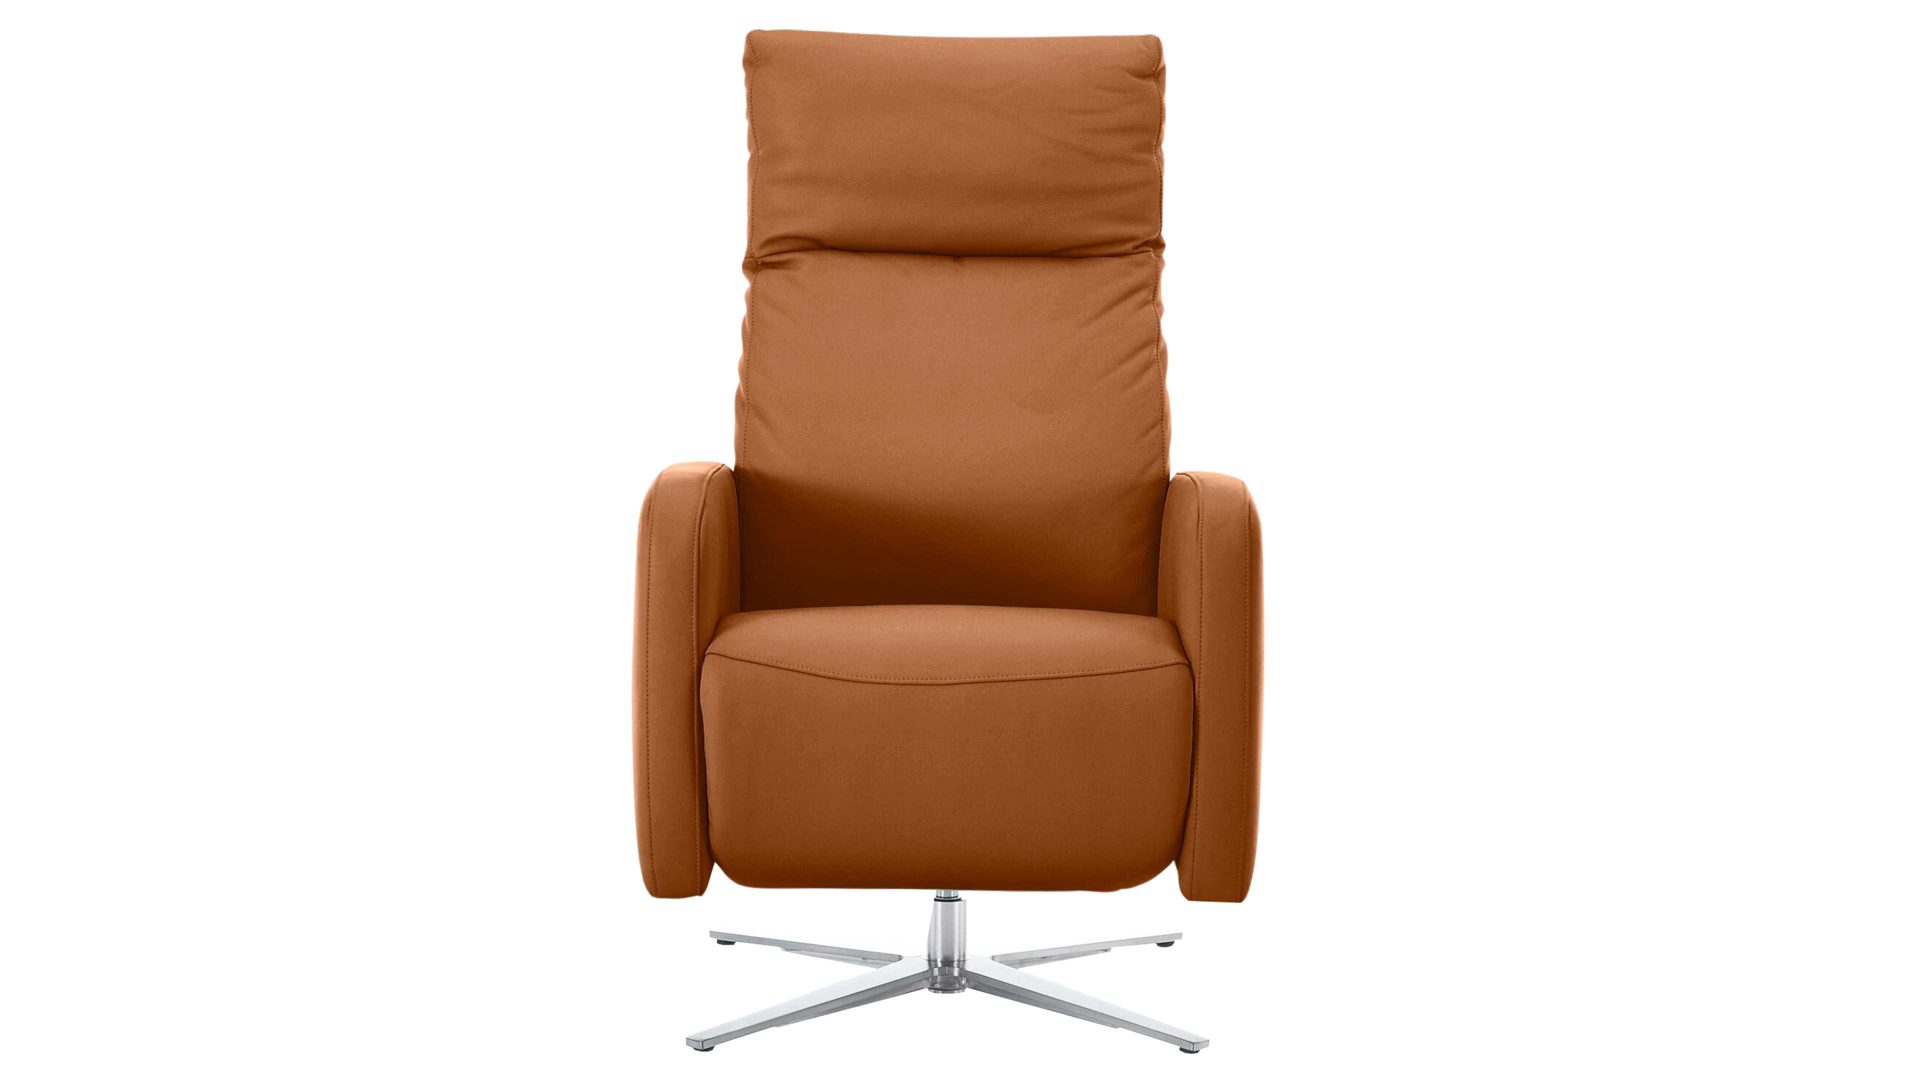 Sessel Interliving aus Leder in Orange Interliving Sessel Serie 4501 – Relaxsessel MS50 cognacfarbenes LongLife-Leder Z77.50 & chromfarbener Sternfuß FU1